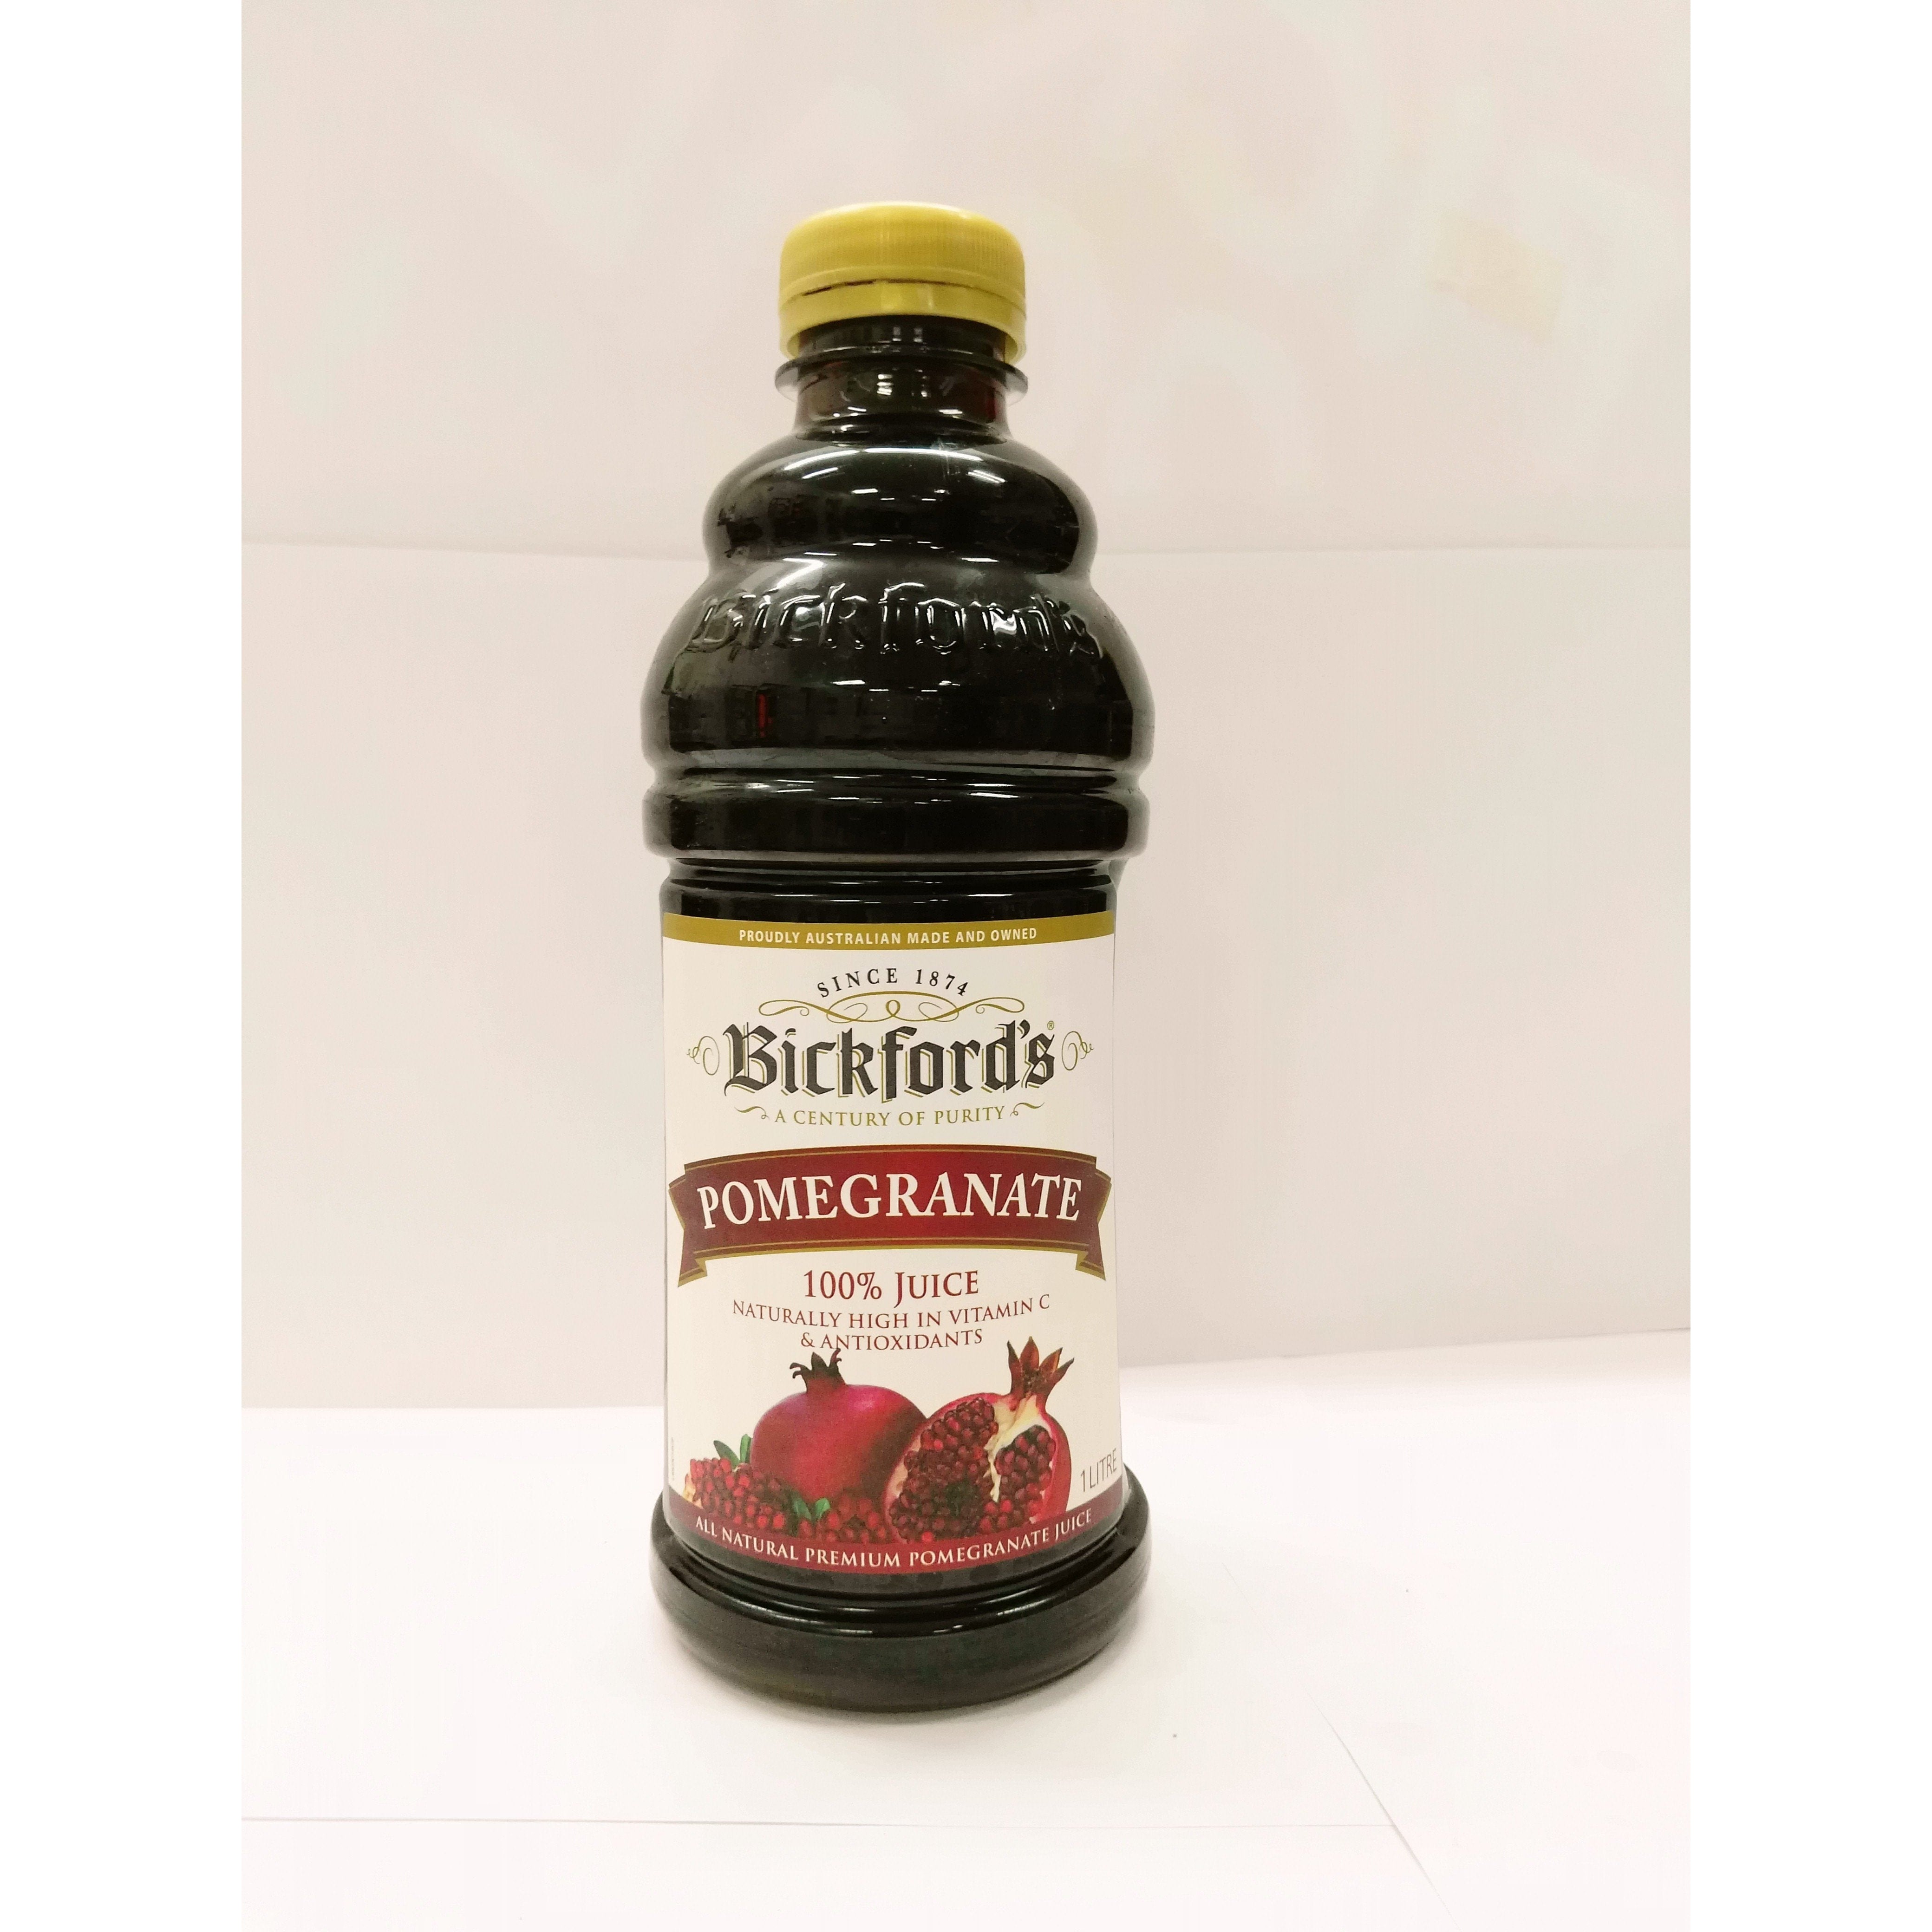 Bickford's Juice Drinks - 1 Litre - Virgara Fruit & Veg